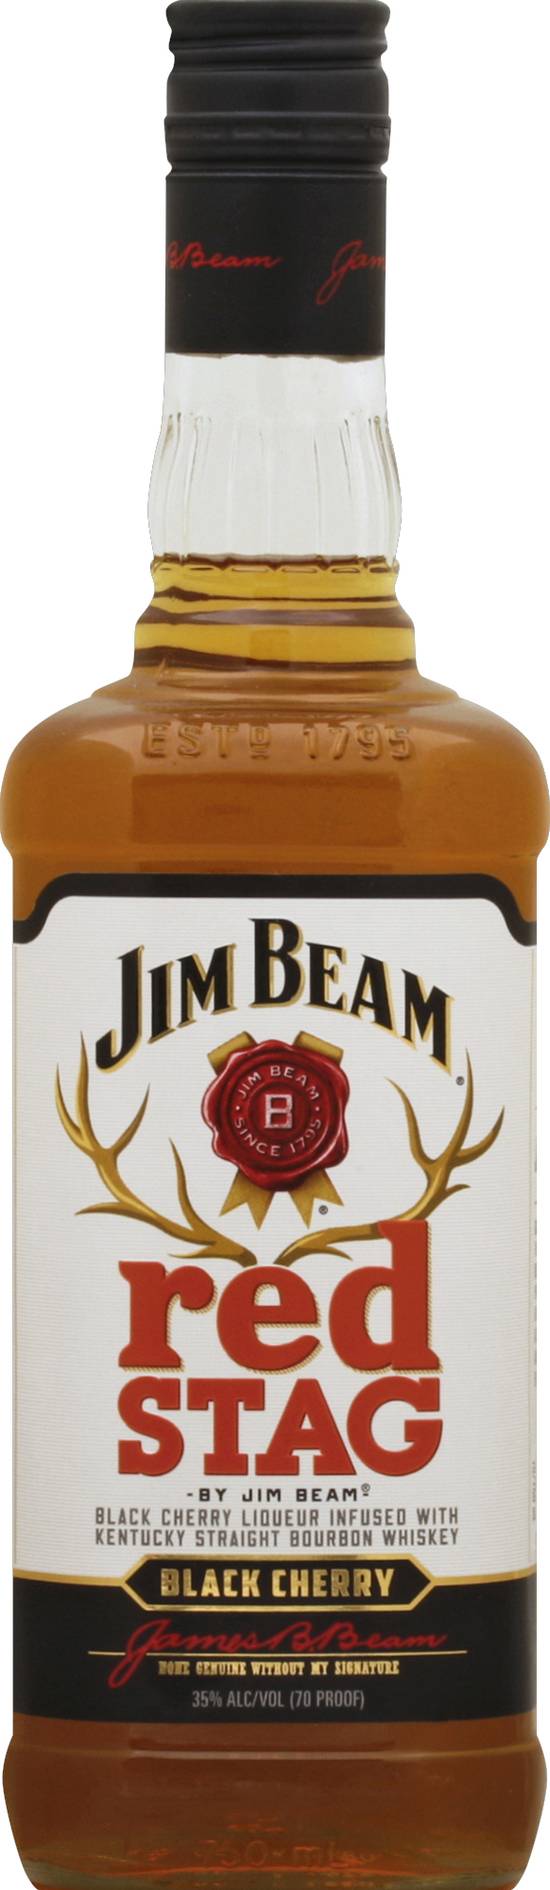 Jim Beam Red Stag Kentucky Straight Bourbon Black Cherry Whiskey (750 ml)